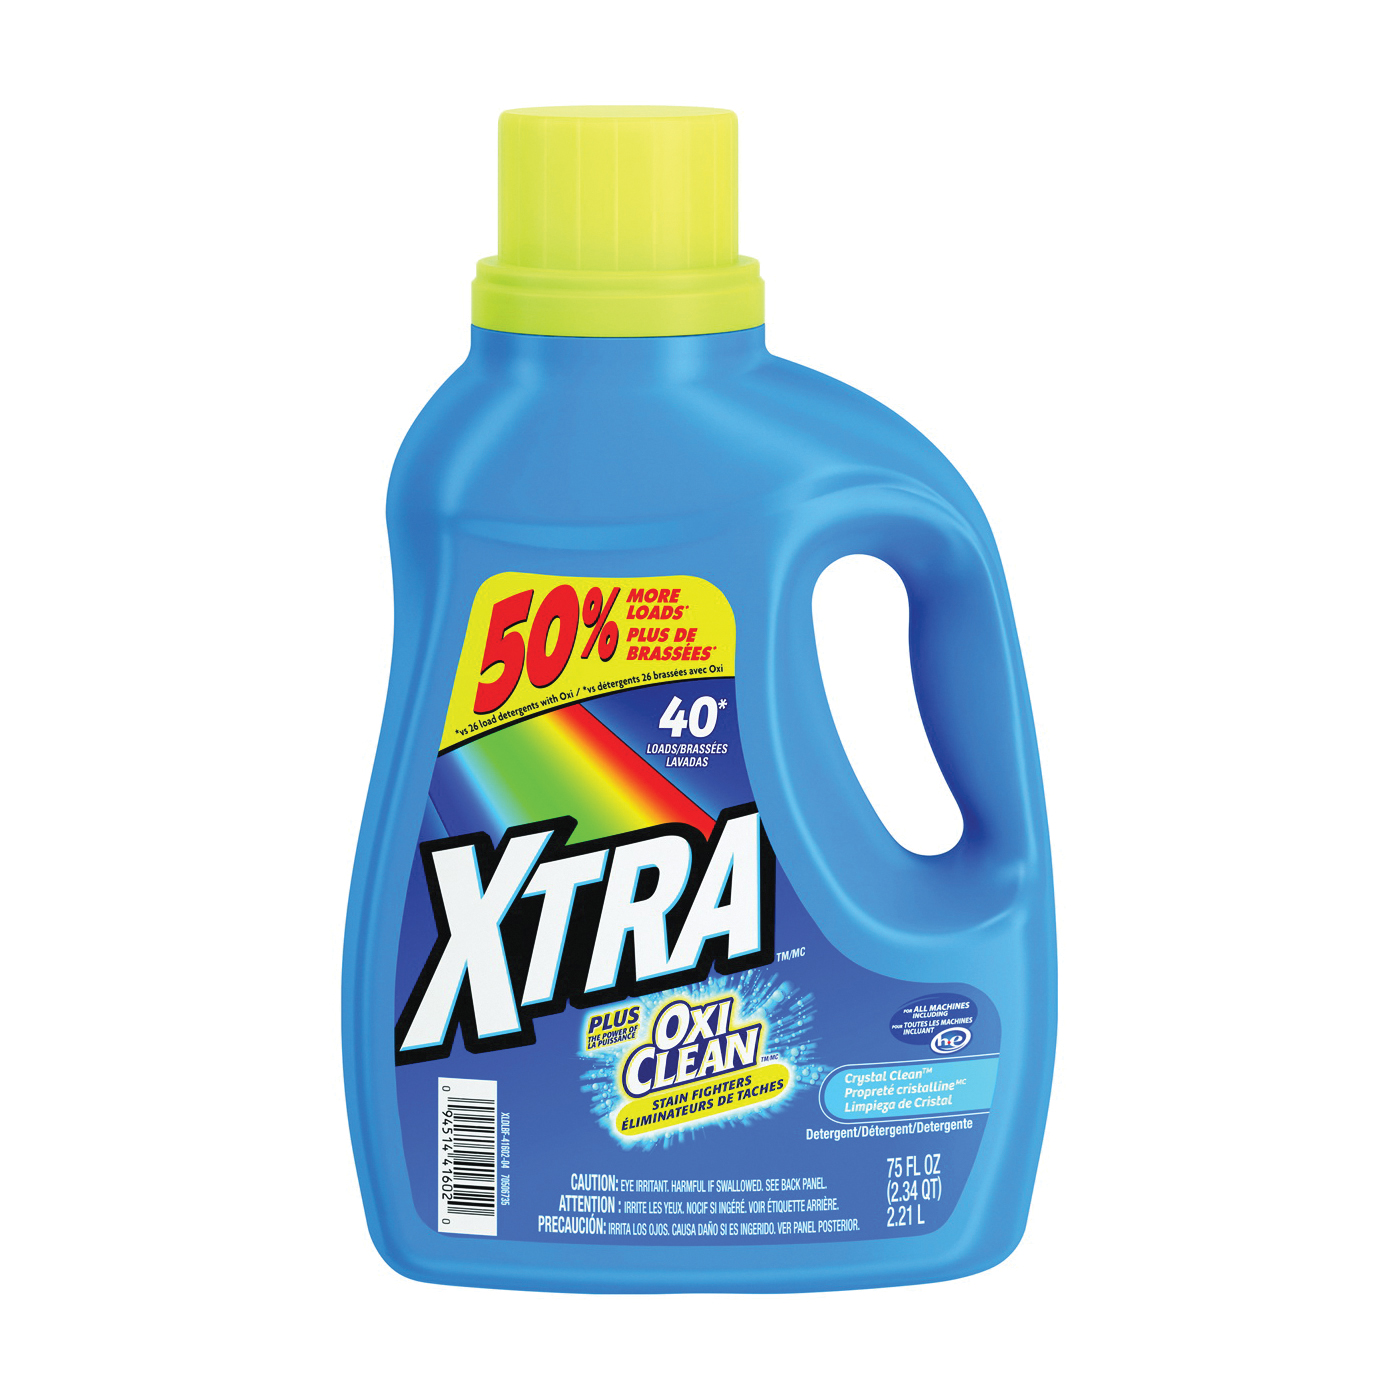 41602 Laundry Detergent, 75 oz, Bottle, Liquid, Clean Crystal